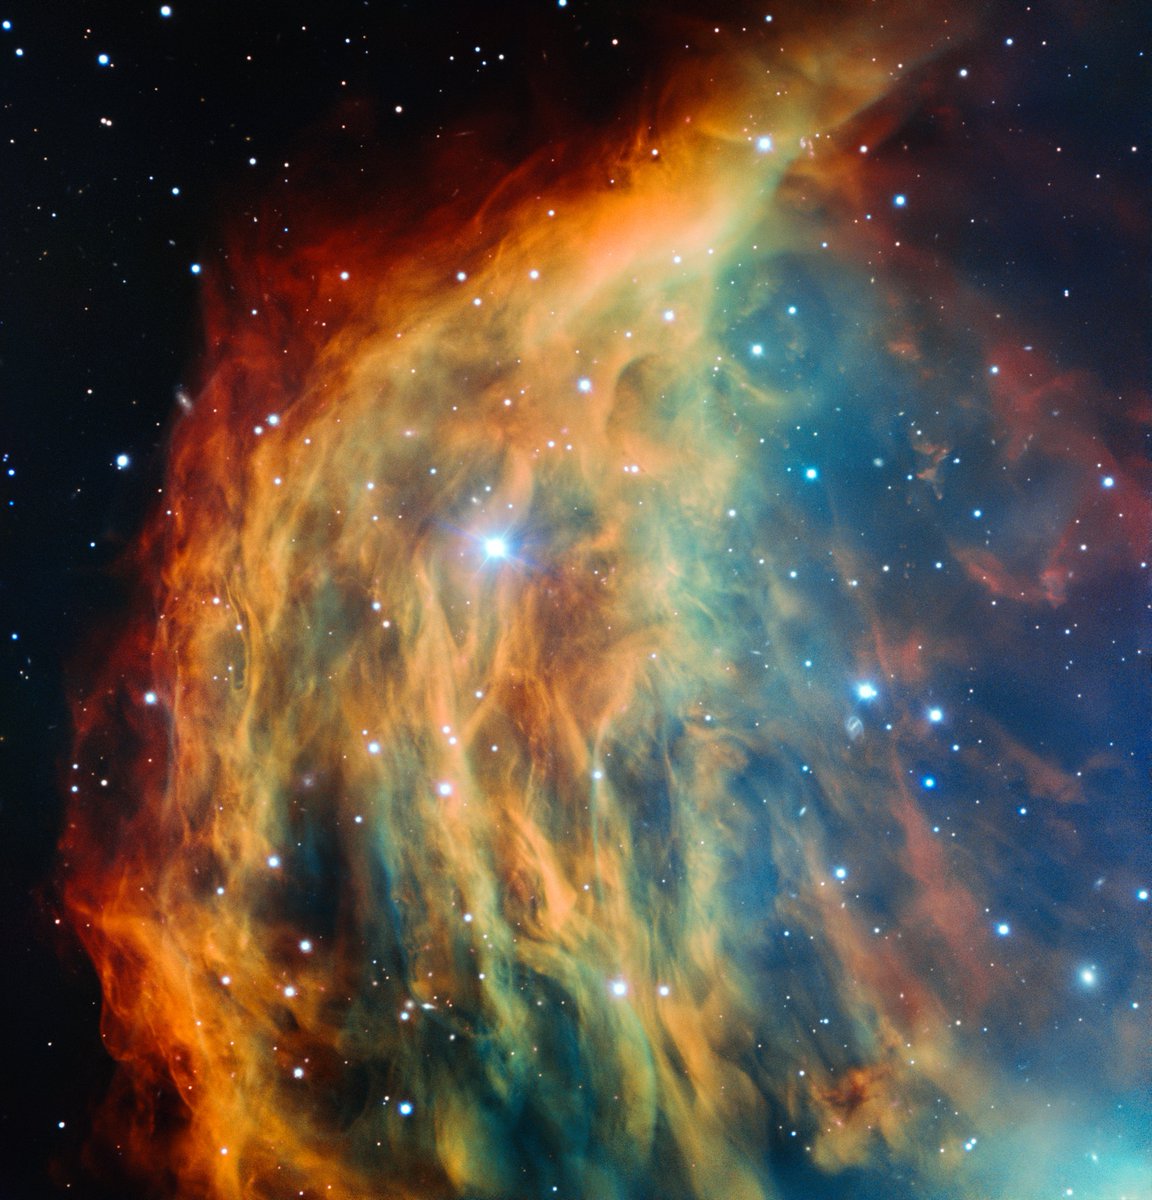 10 amazing VLT images: our pick of the best captures by @ESO's #VeryLargeTelescope.

skyatnightmagazine.com/news/10-amazin…